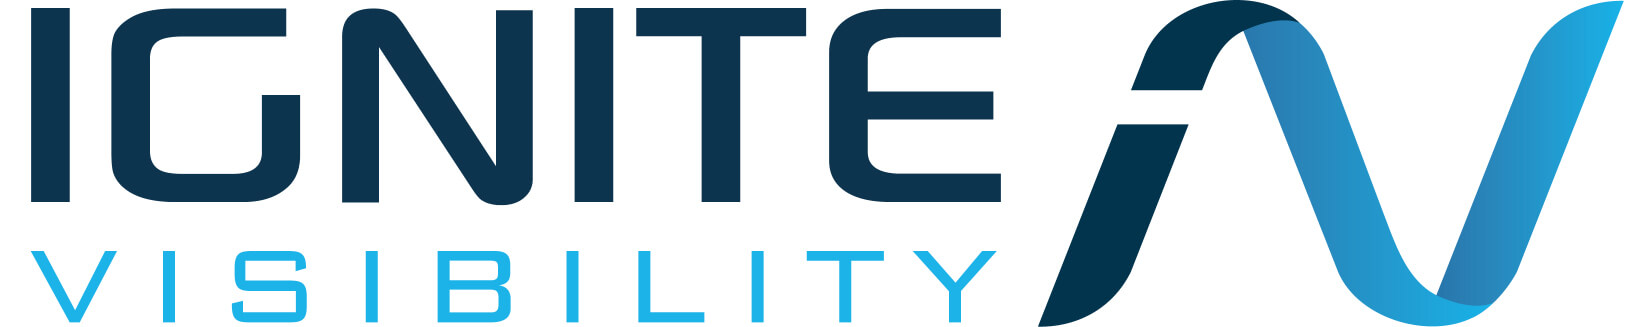 Top Corporate SEO Business Logo: Ignite Visibility